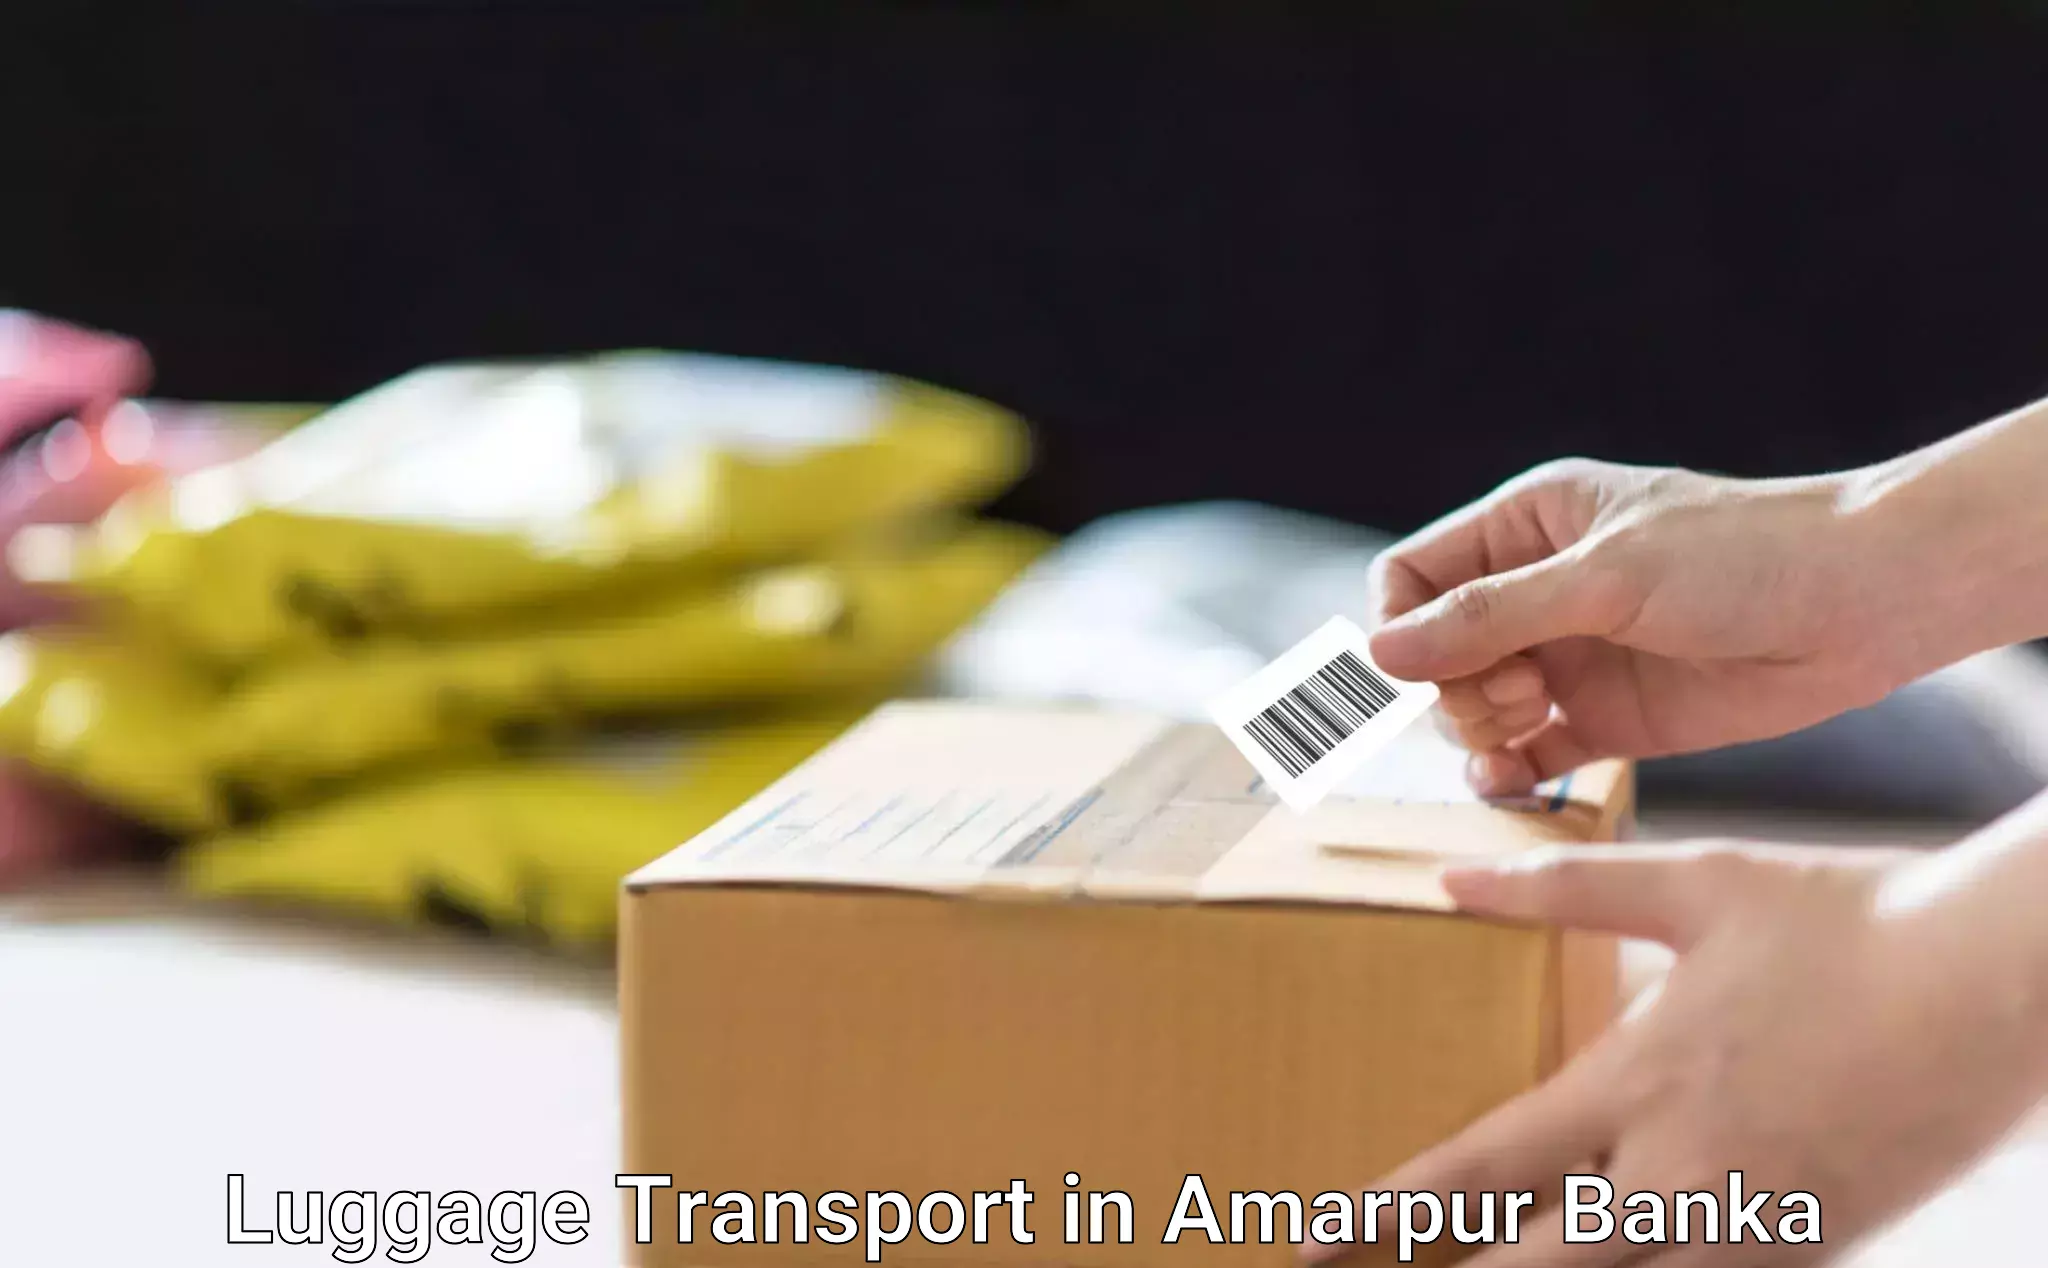 Efficient baggage transport in Amarpur Banka